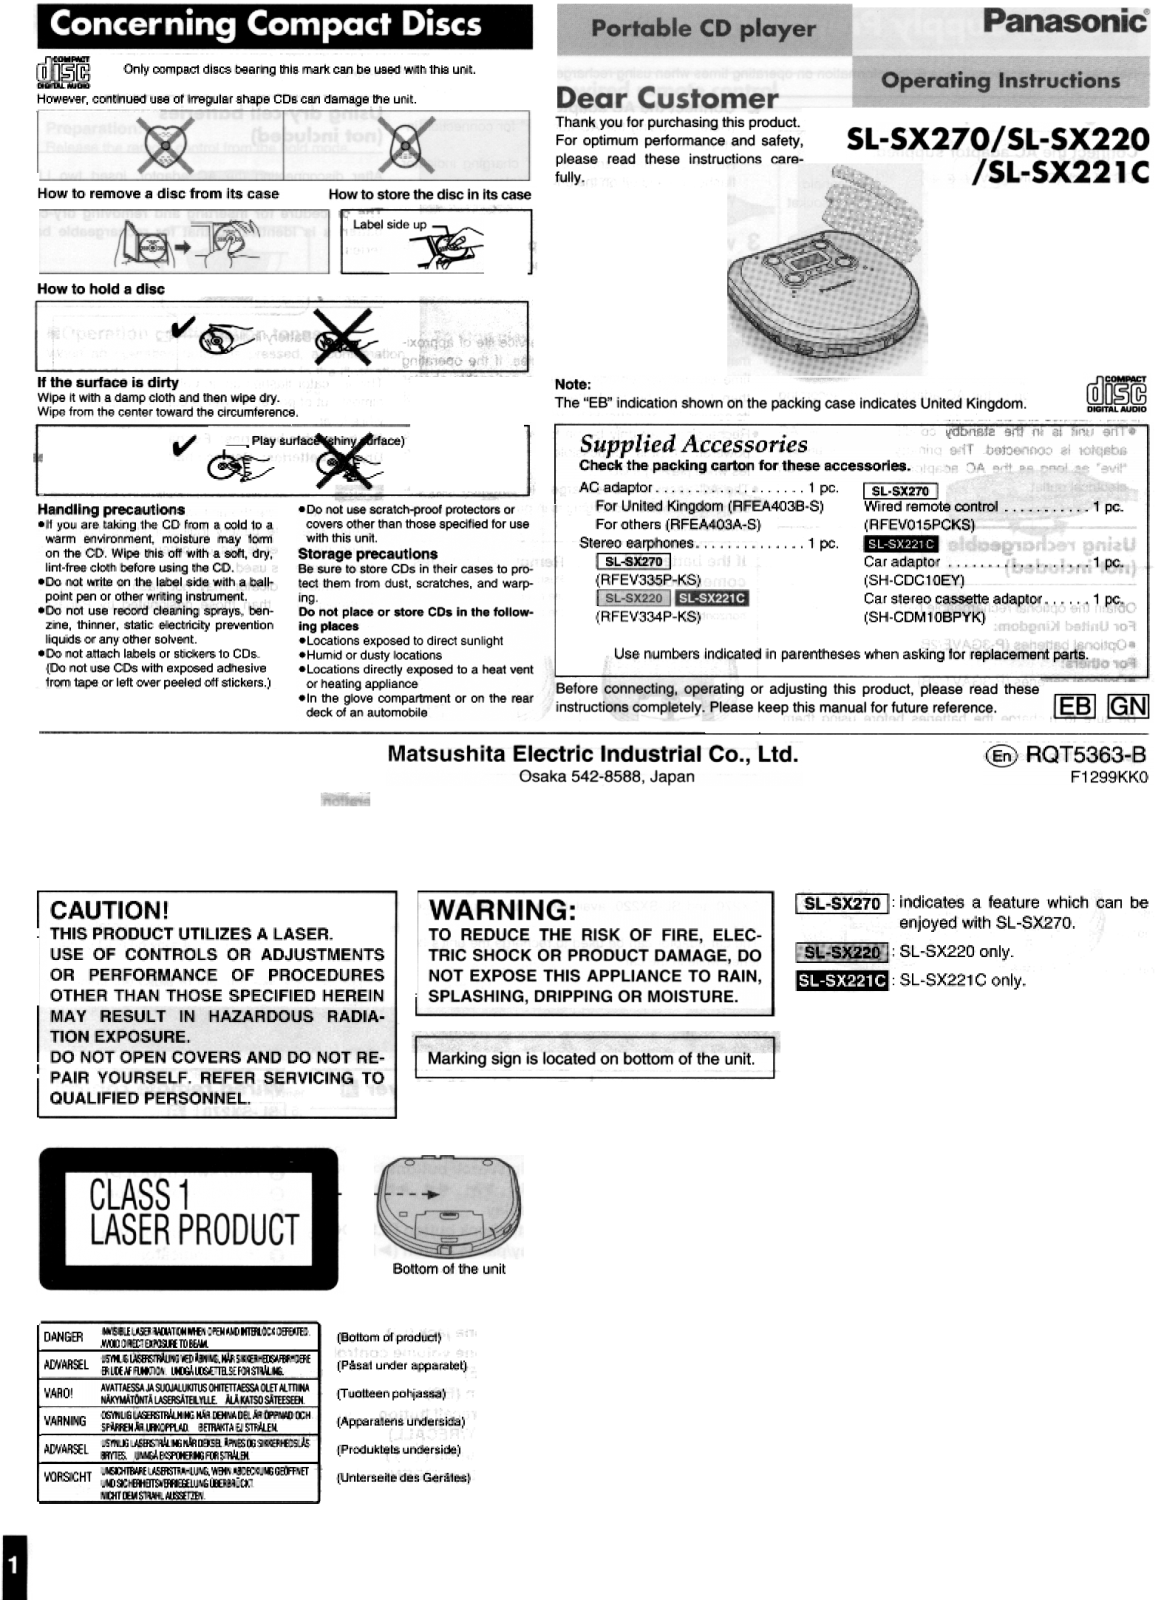 Panasonic SL-SX221, SL-SX220, SL-SX270 User Manual